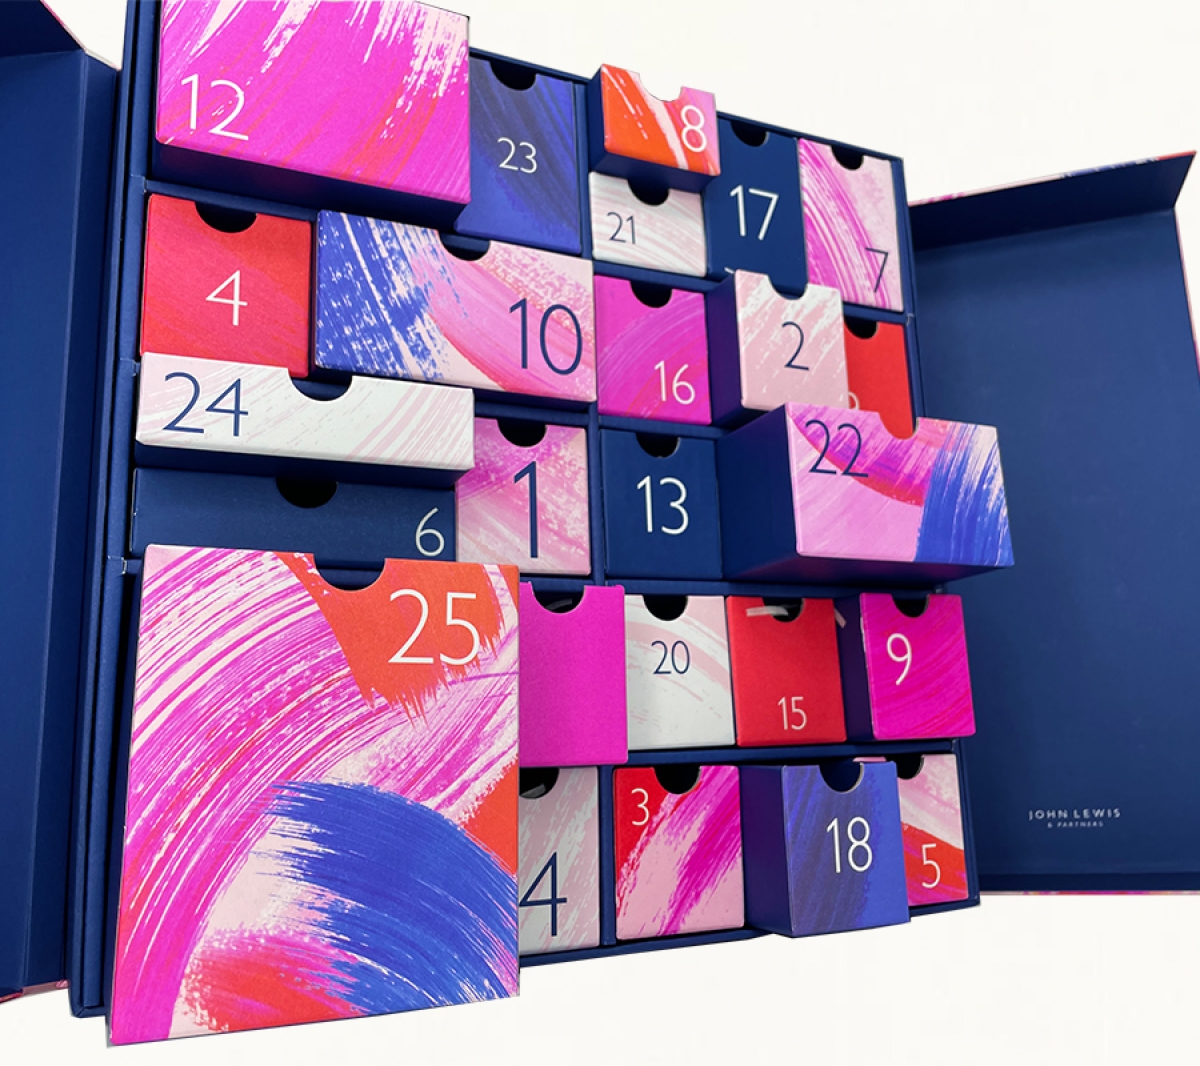 john-lewis-luxury-calendar-drawers